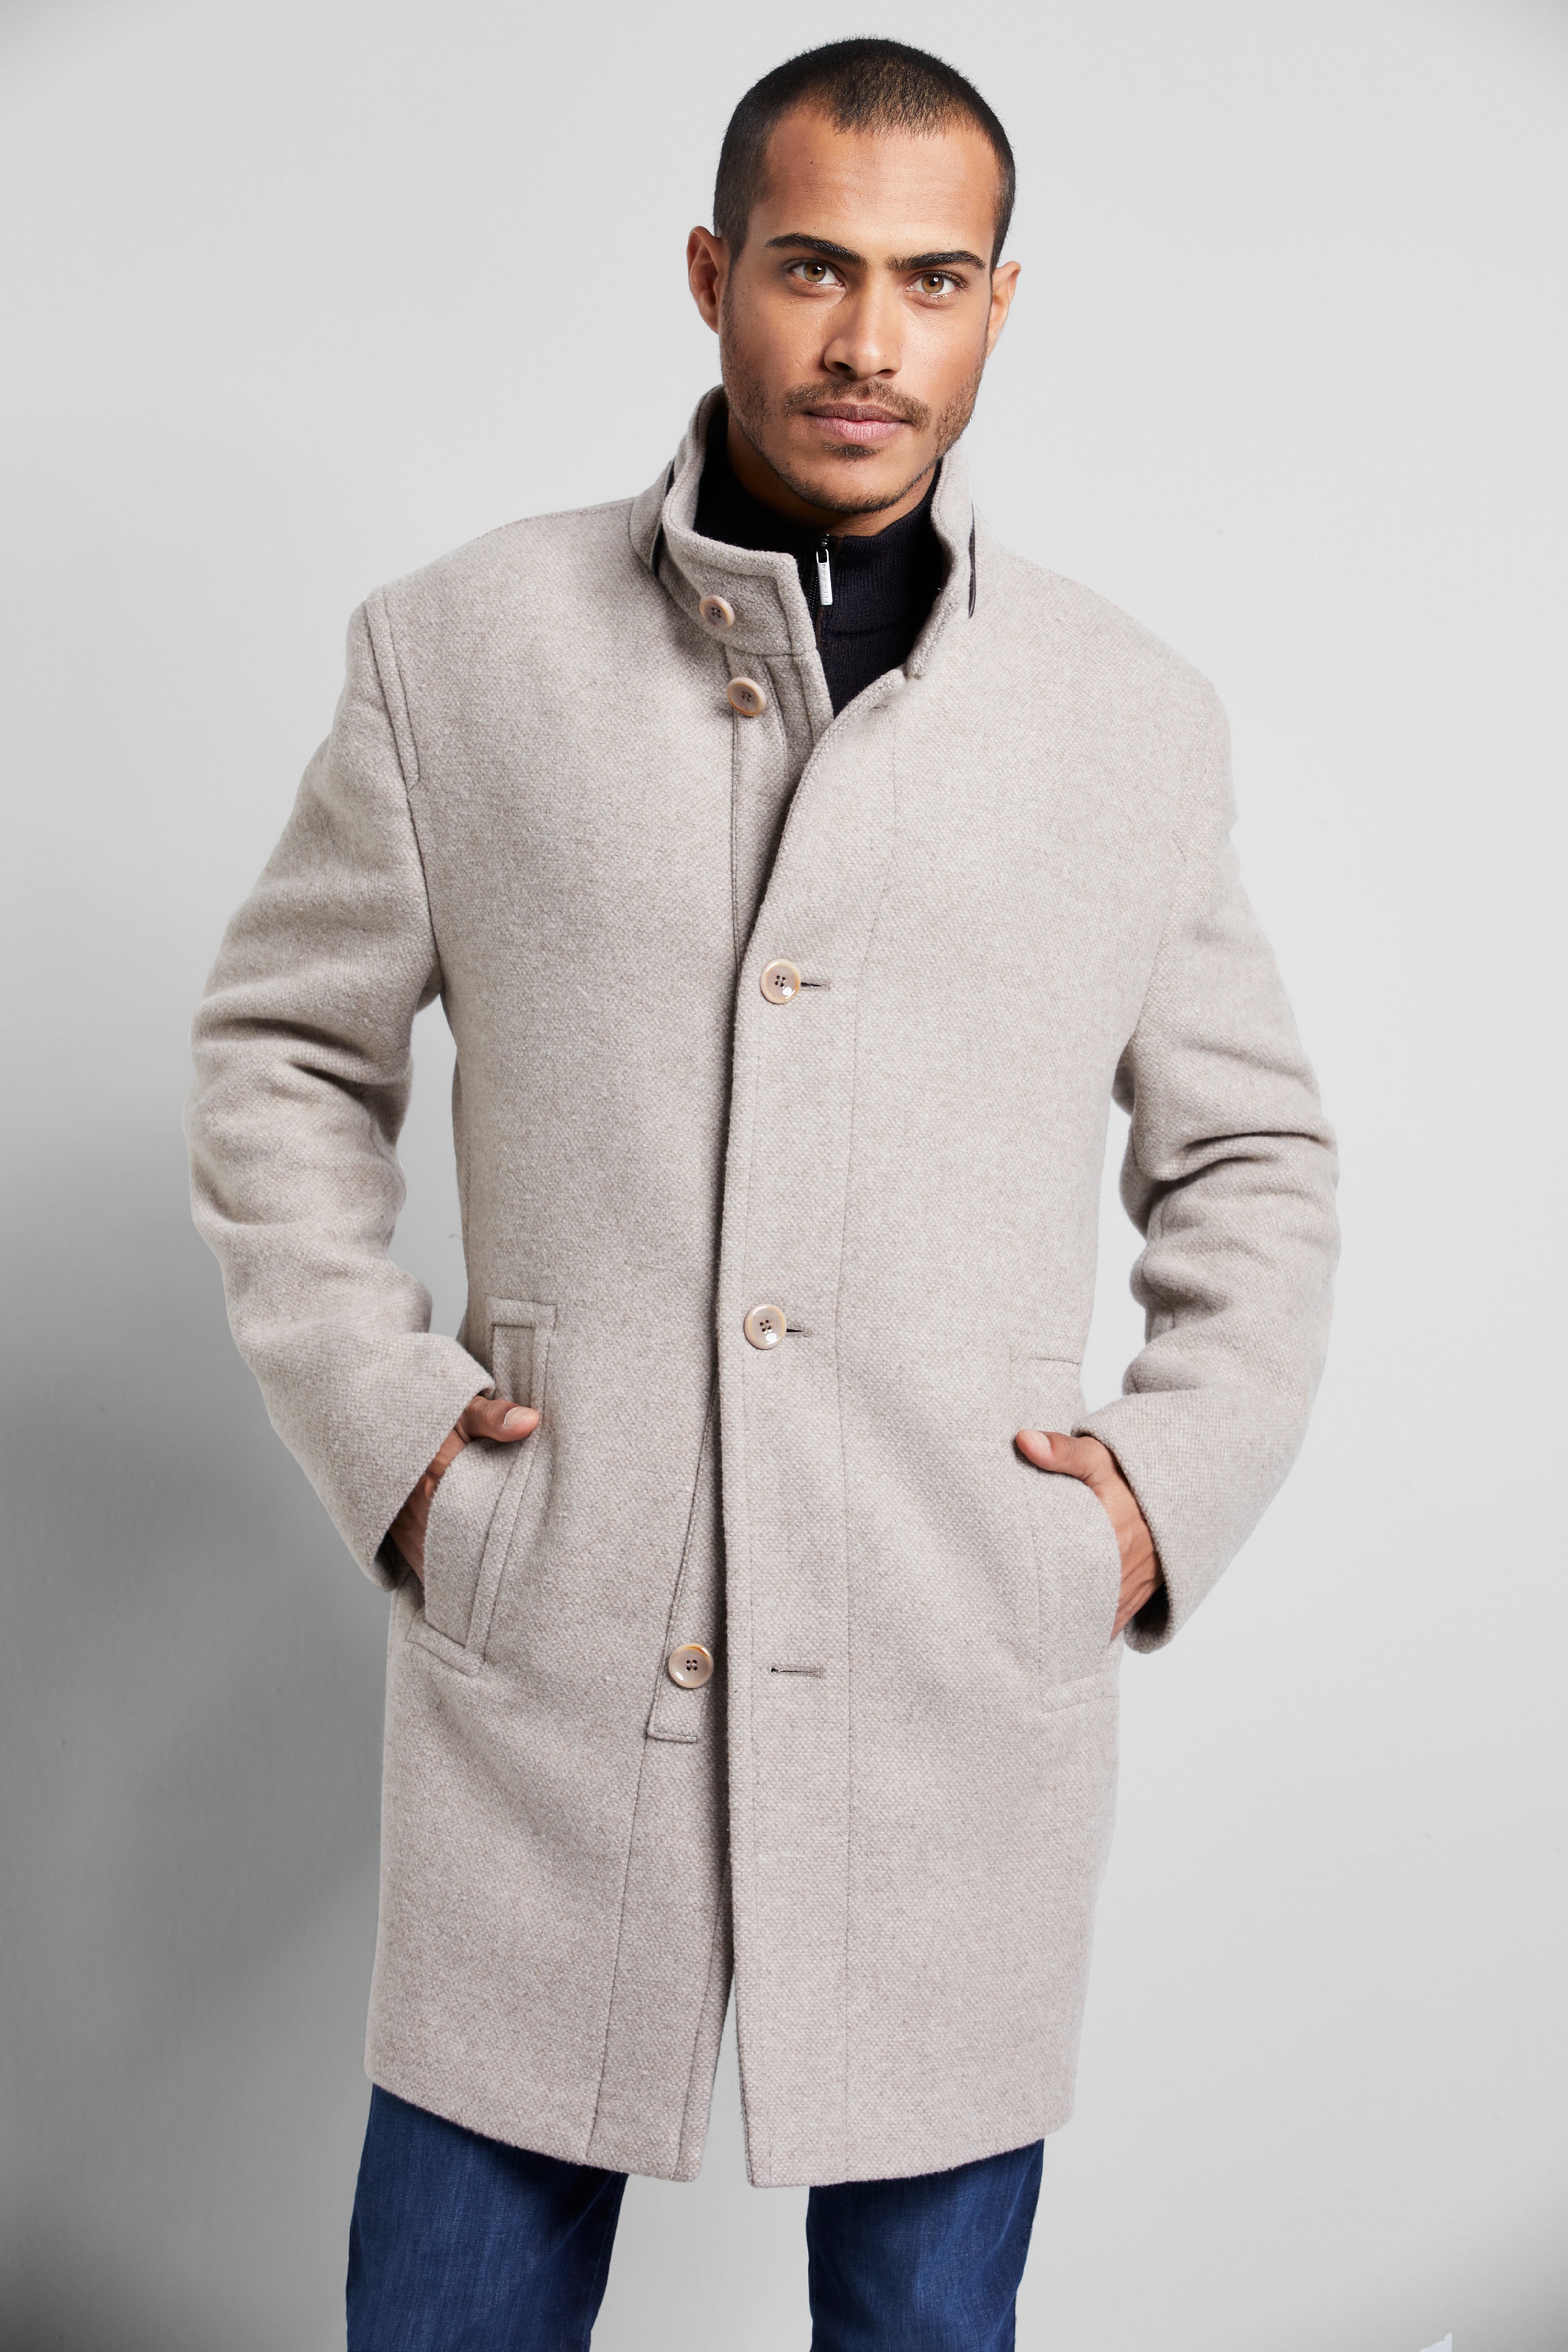 Winter coat Extra-warm lining in beige | bugatti